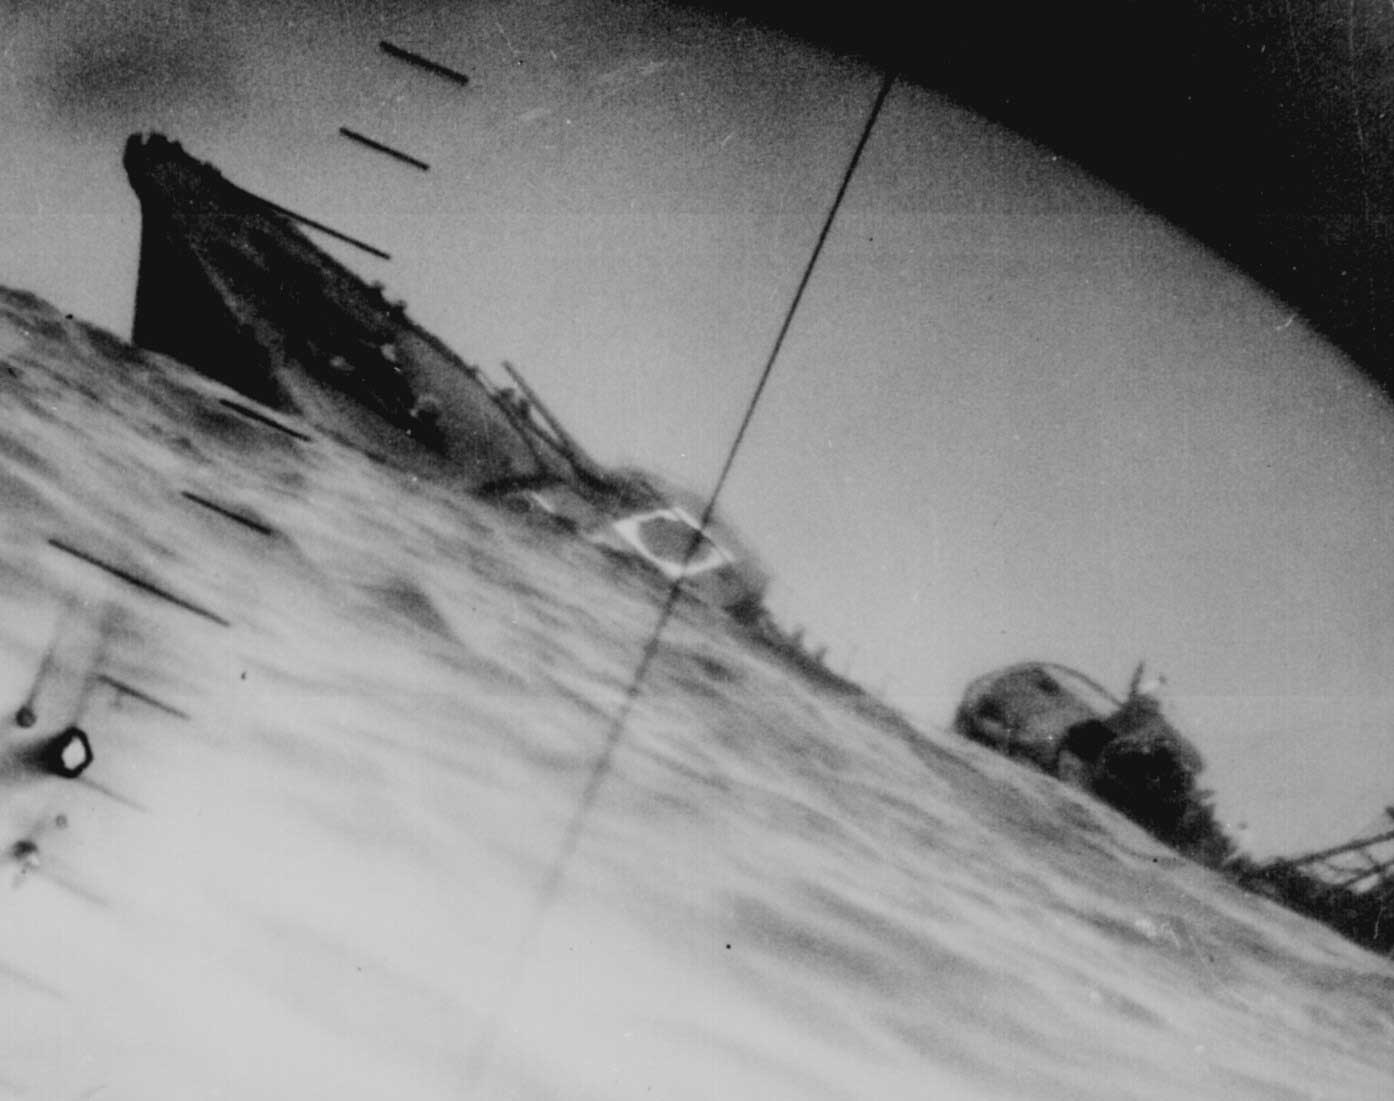 Yamakaze sinking as seen from the periscope of USS Nautilus, 25 Jun 1942, photo 2 of 2